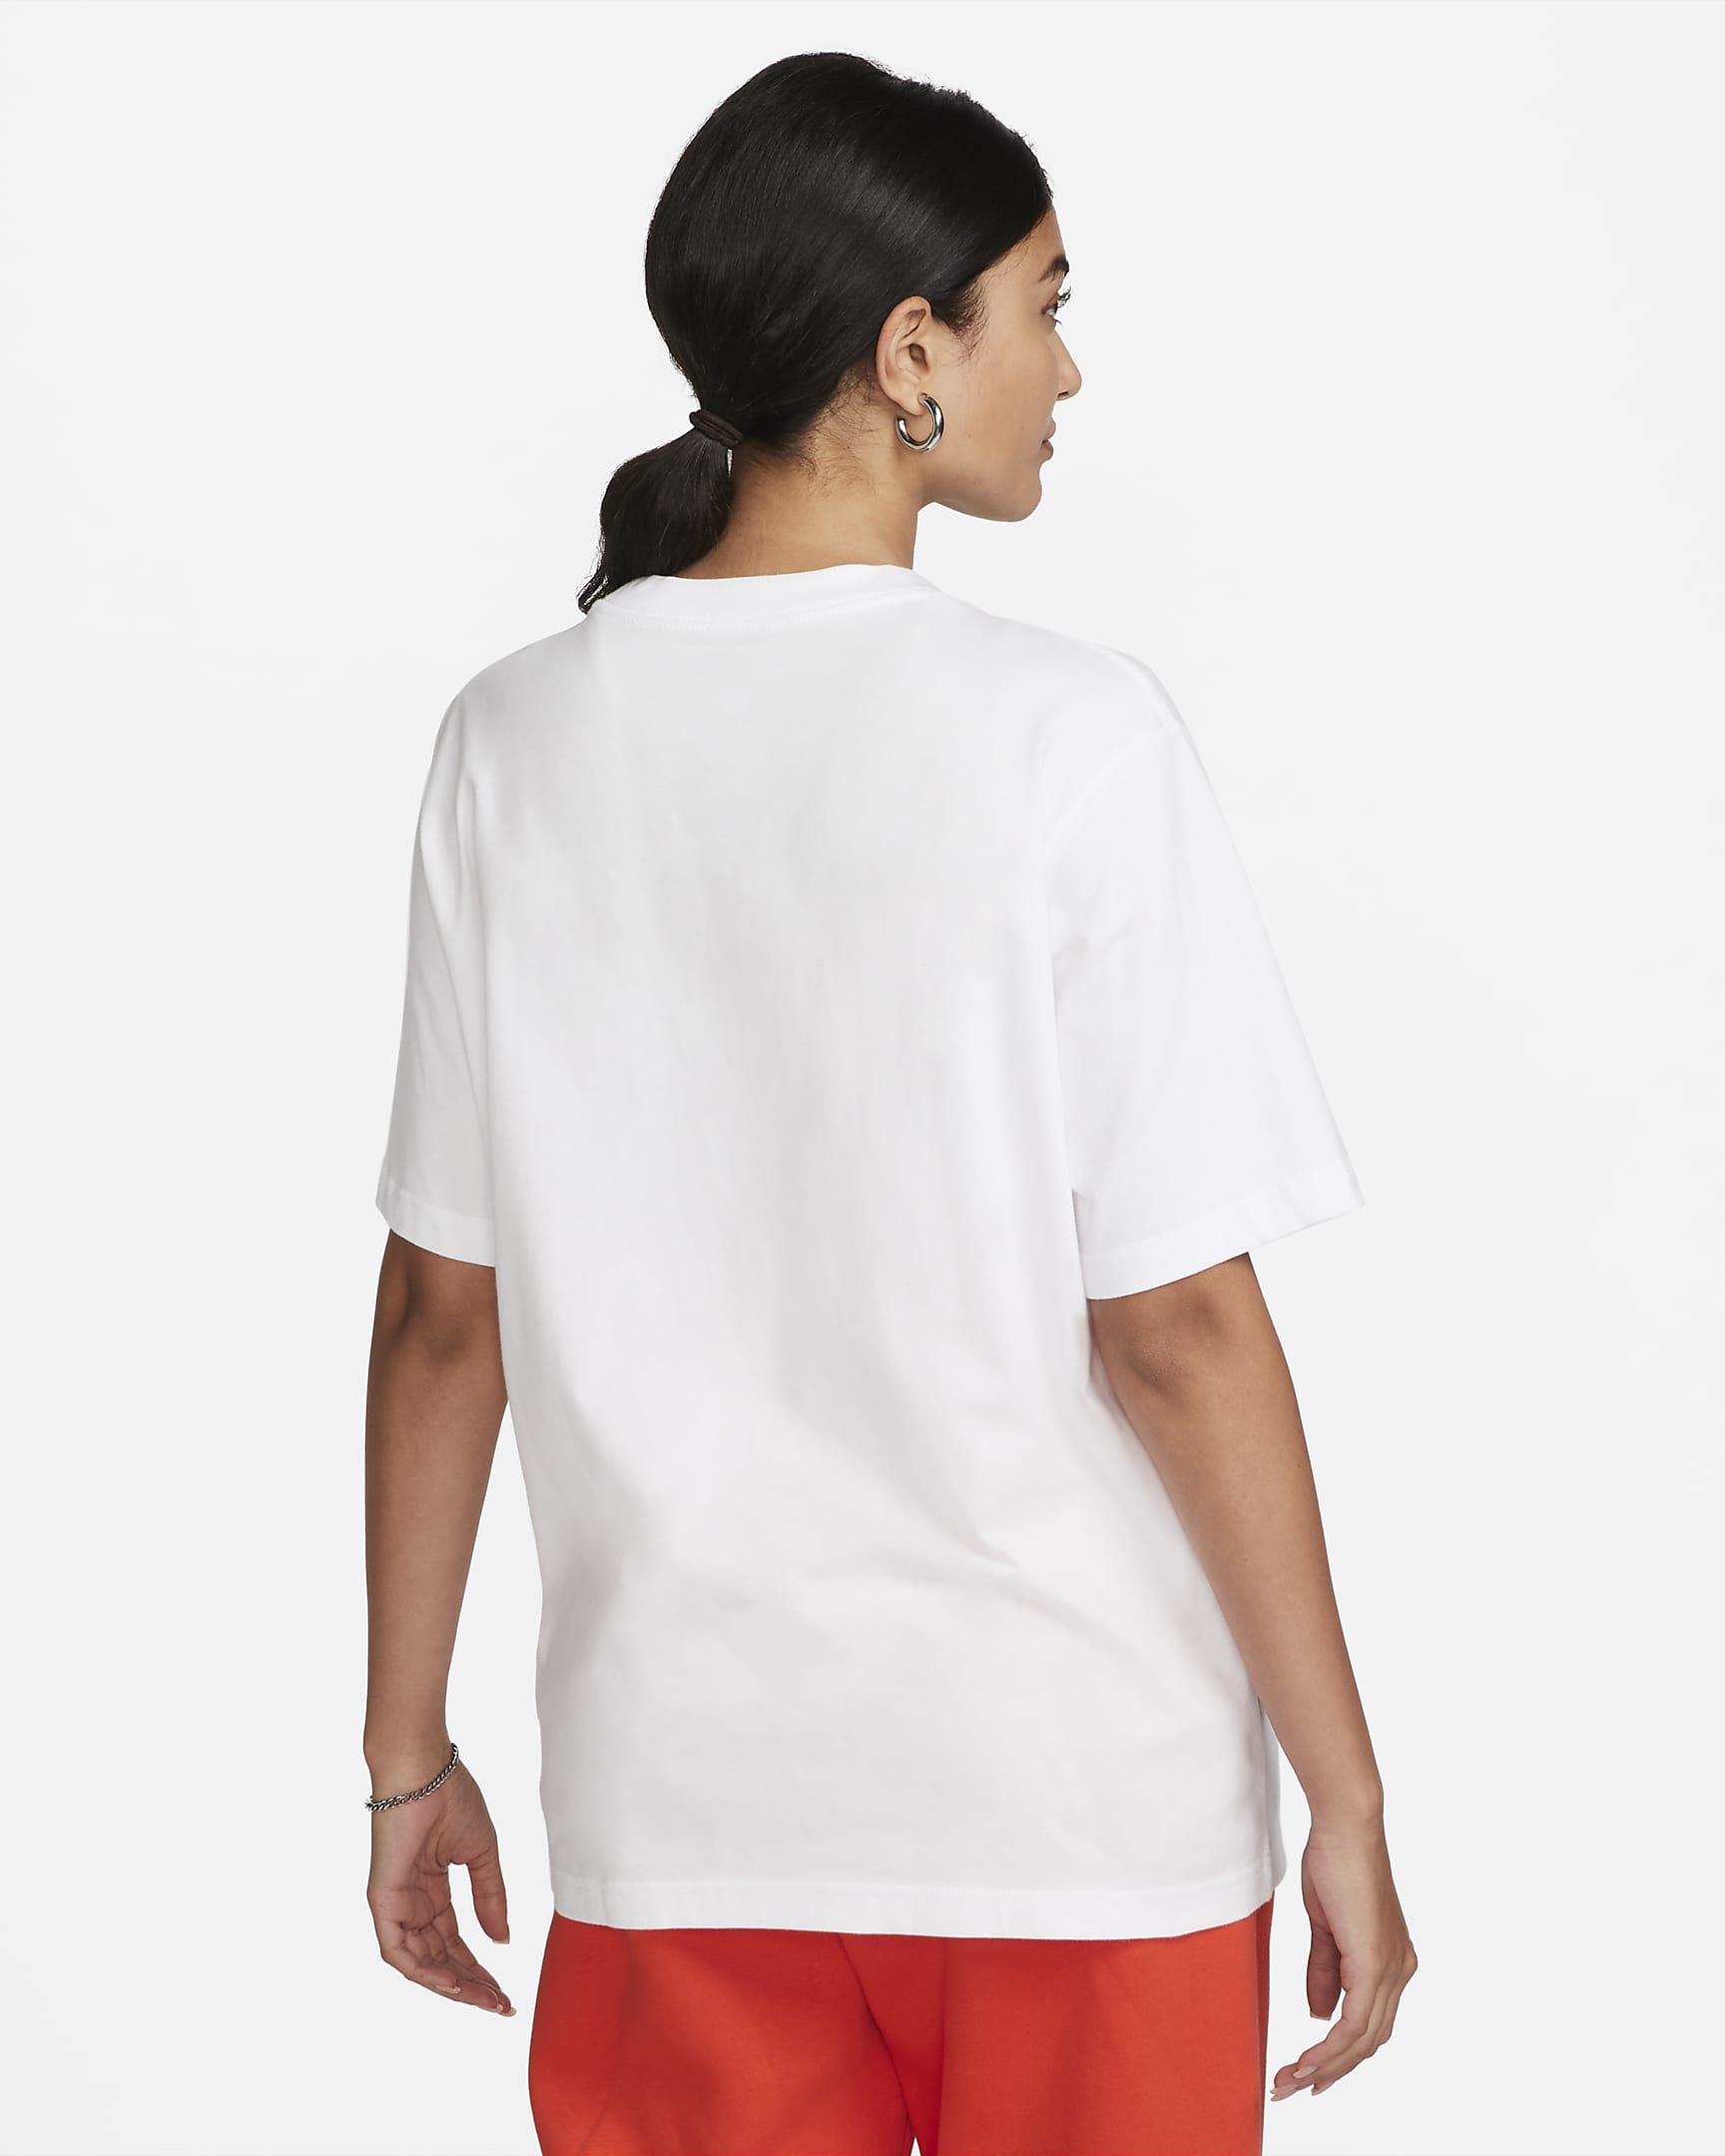 Nike Sportswear Essential Damen-T-Shirt - Weiß/Schwarz